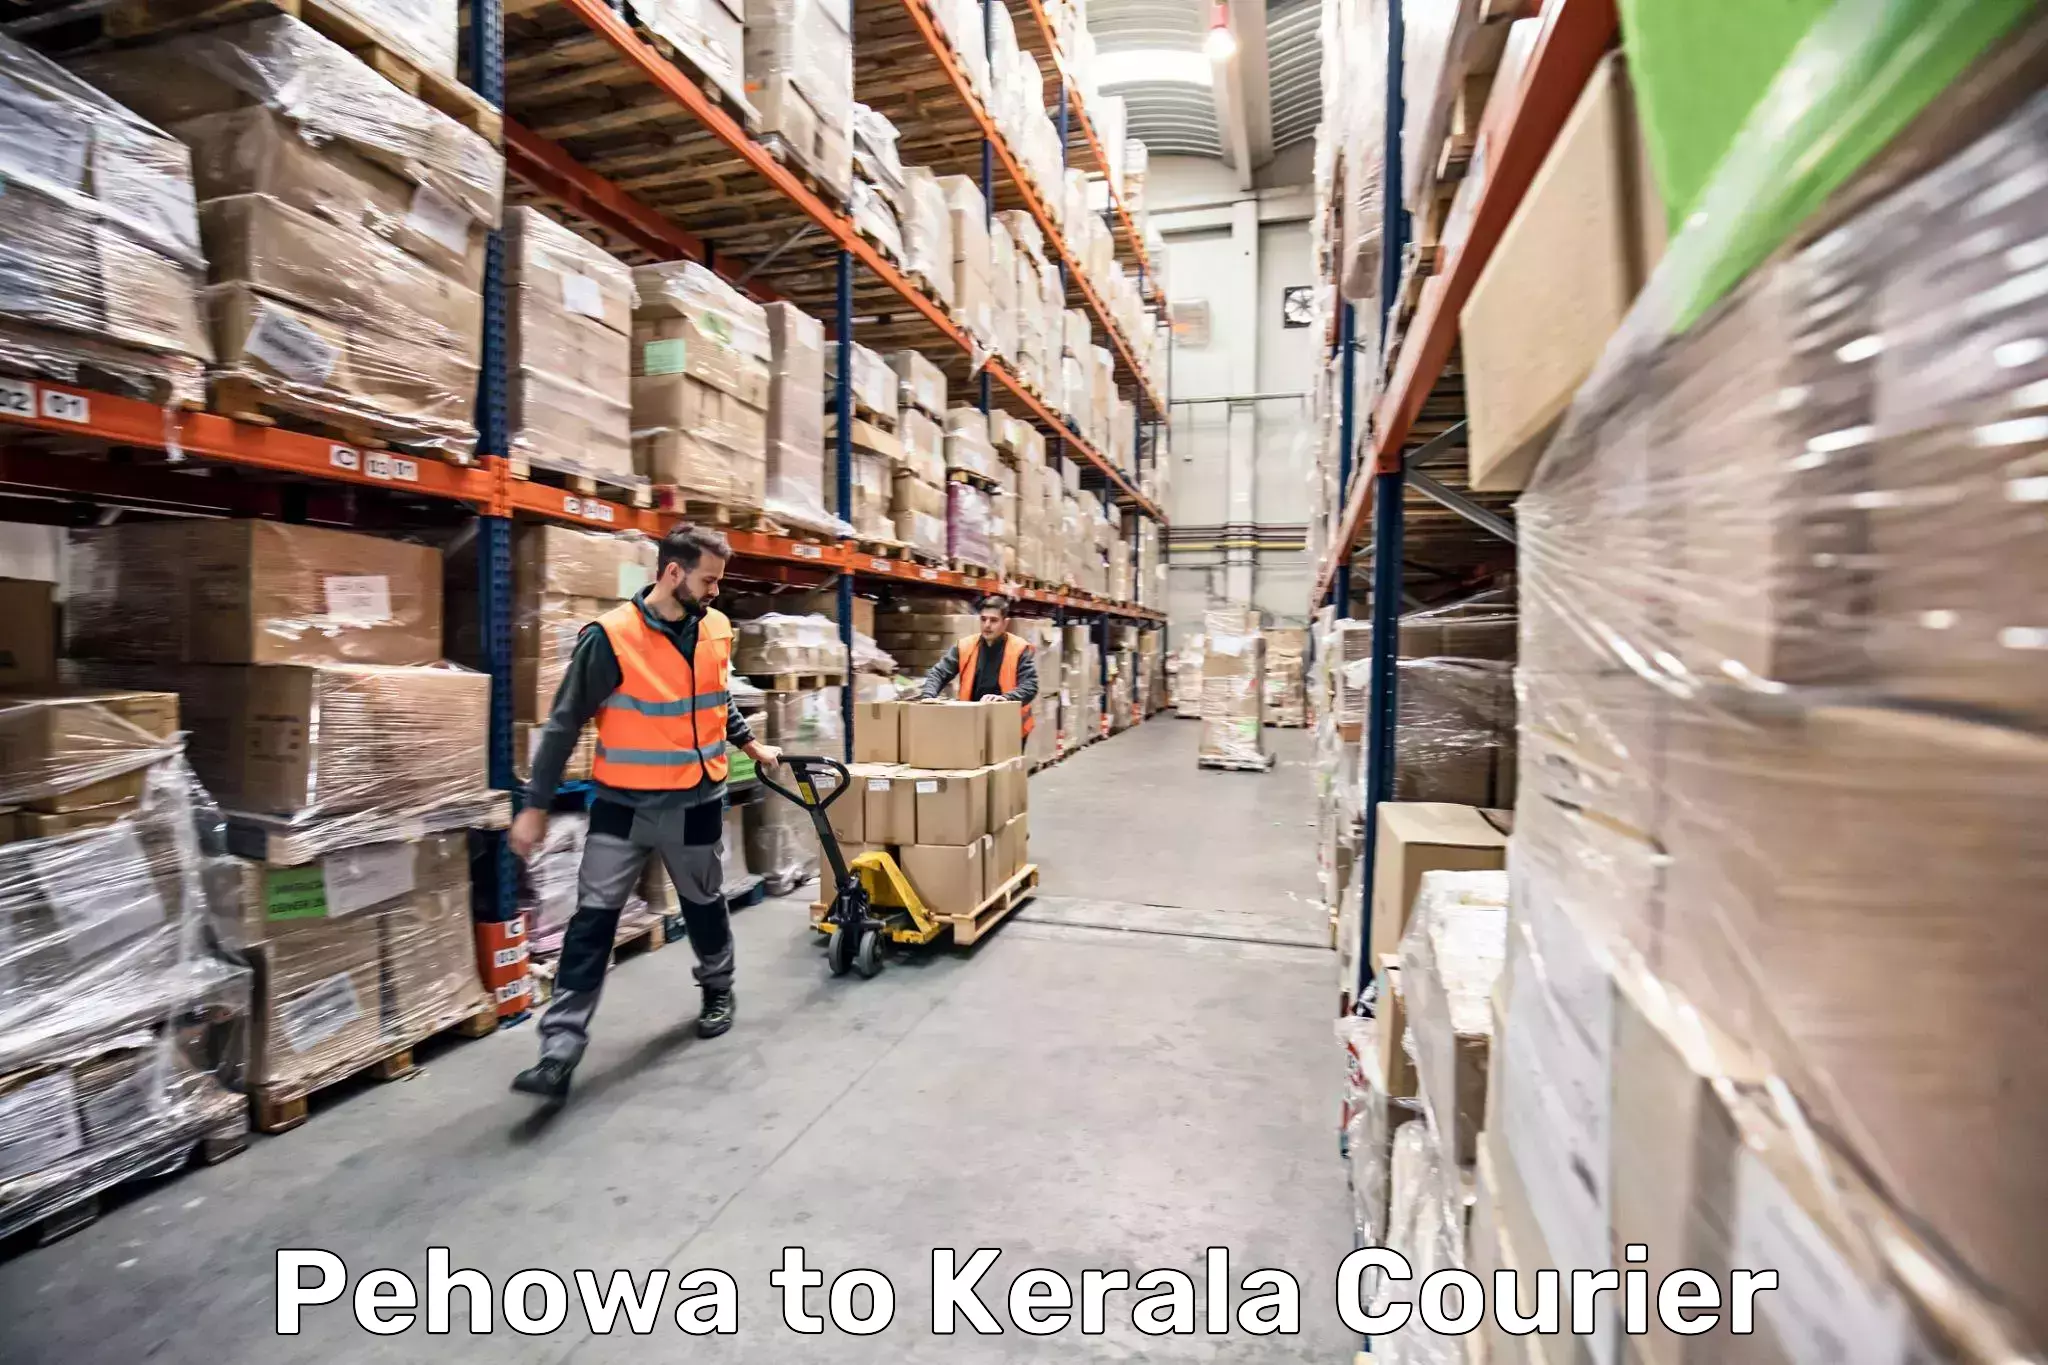 Luggage transfer service Pehowa to Kerala